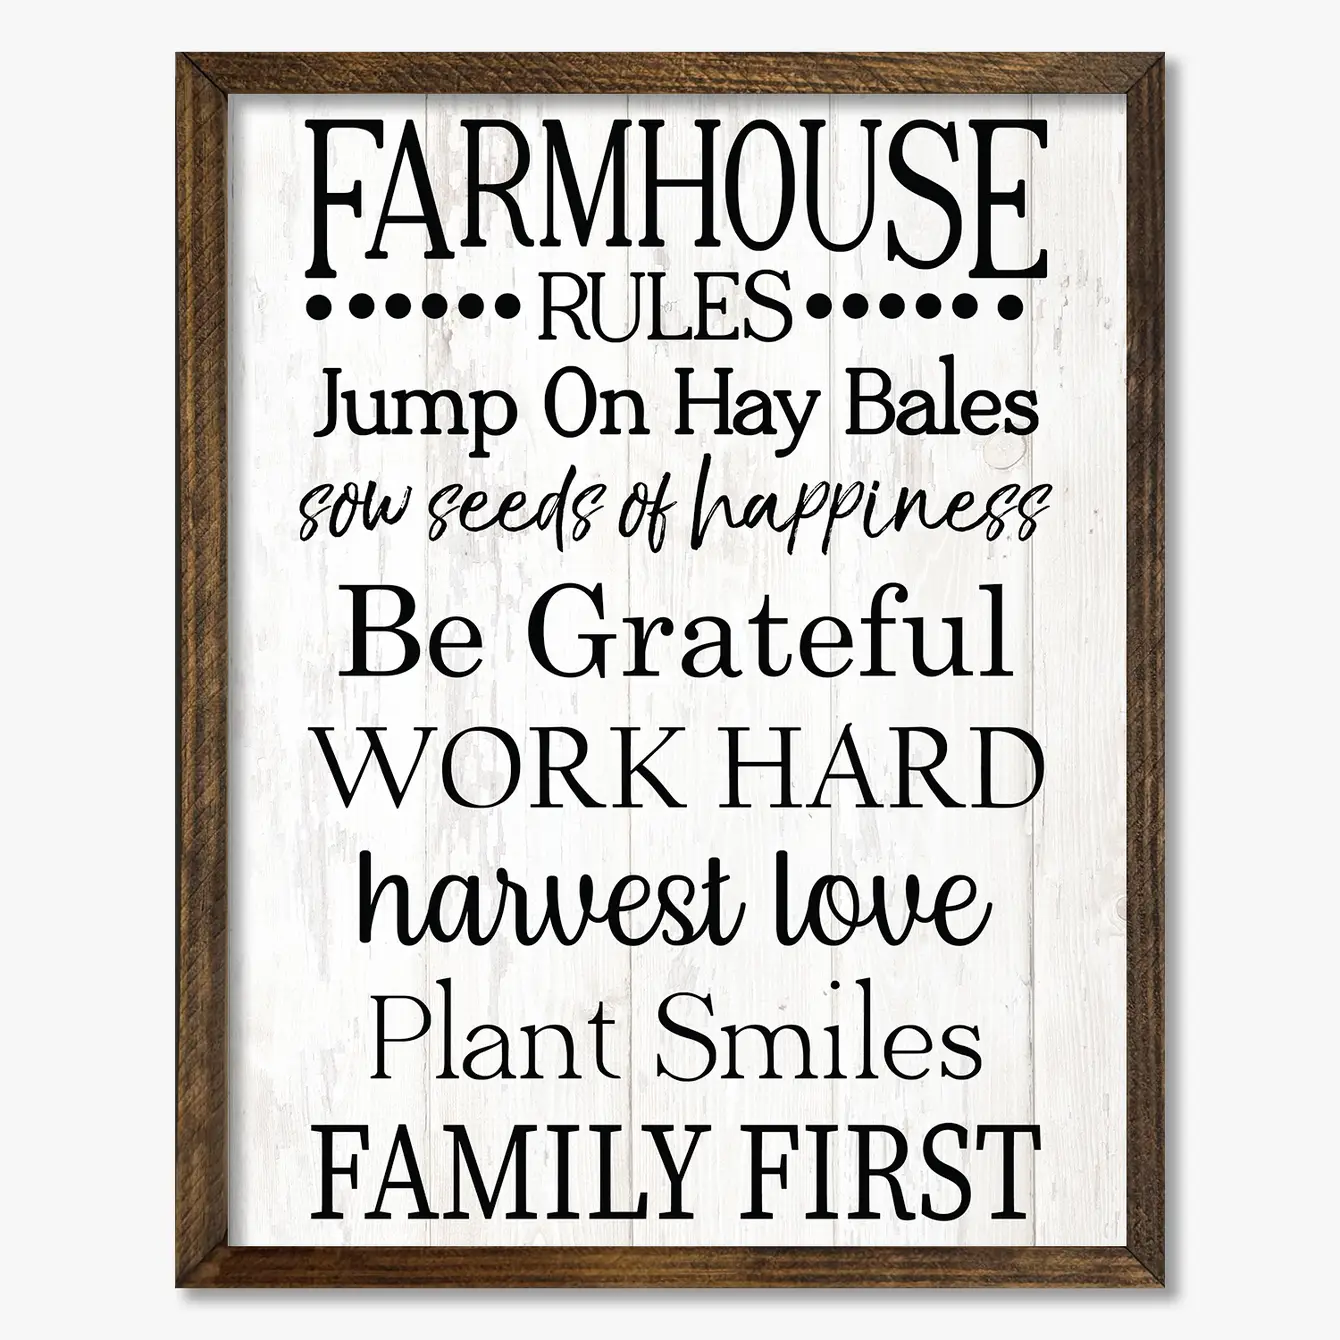 TIMBERLAND FRAME FARMHOUSE RULES